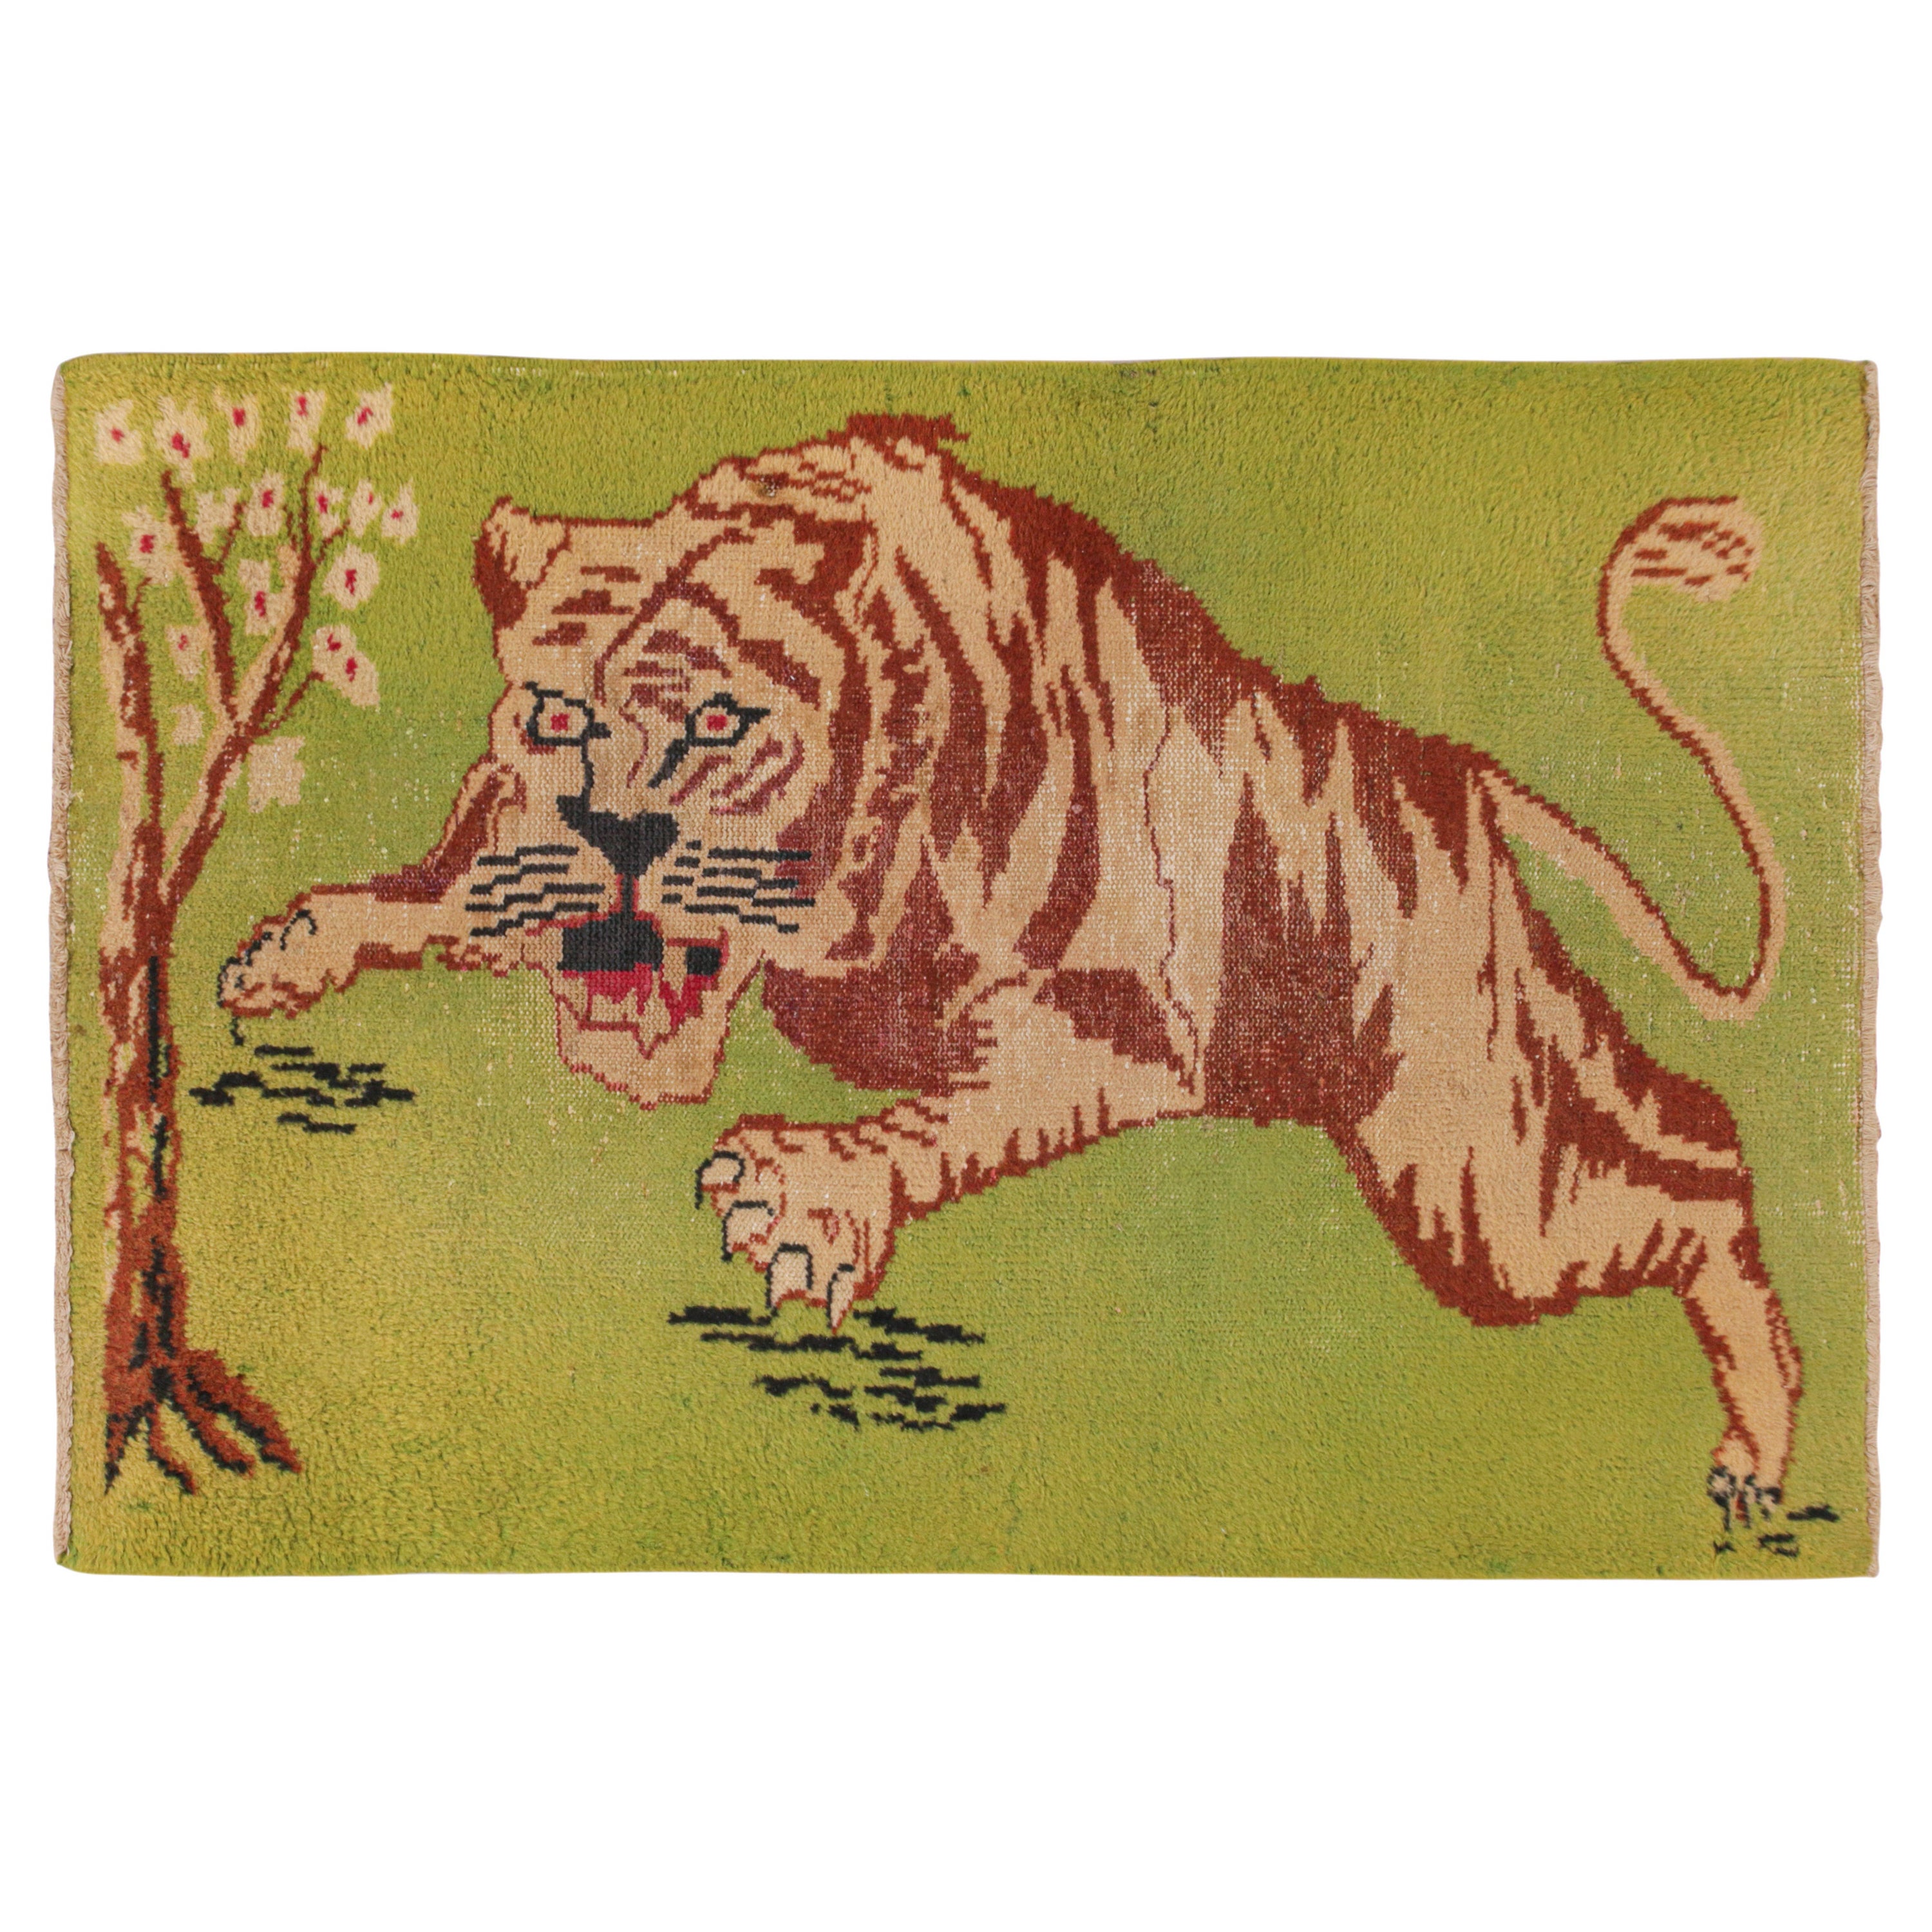 Vintage Zeki Müren Rug in Green with Beige-Brown Tiger Pictorial by Rug & Kilim For Sale